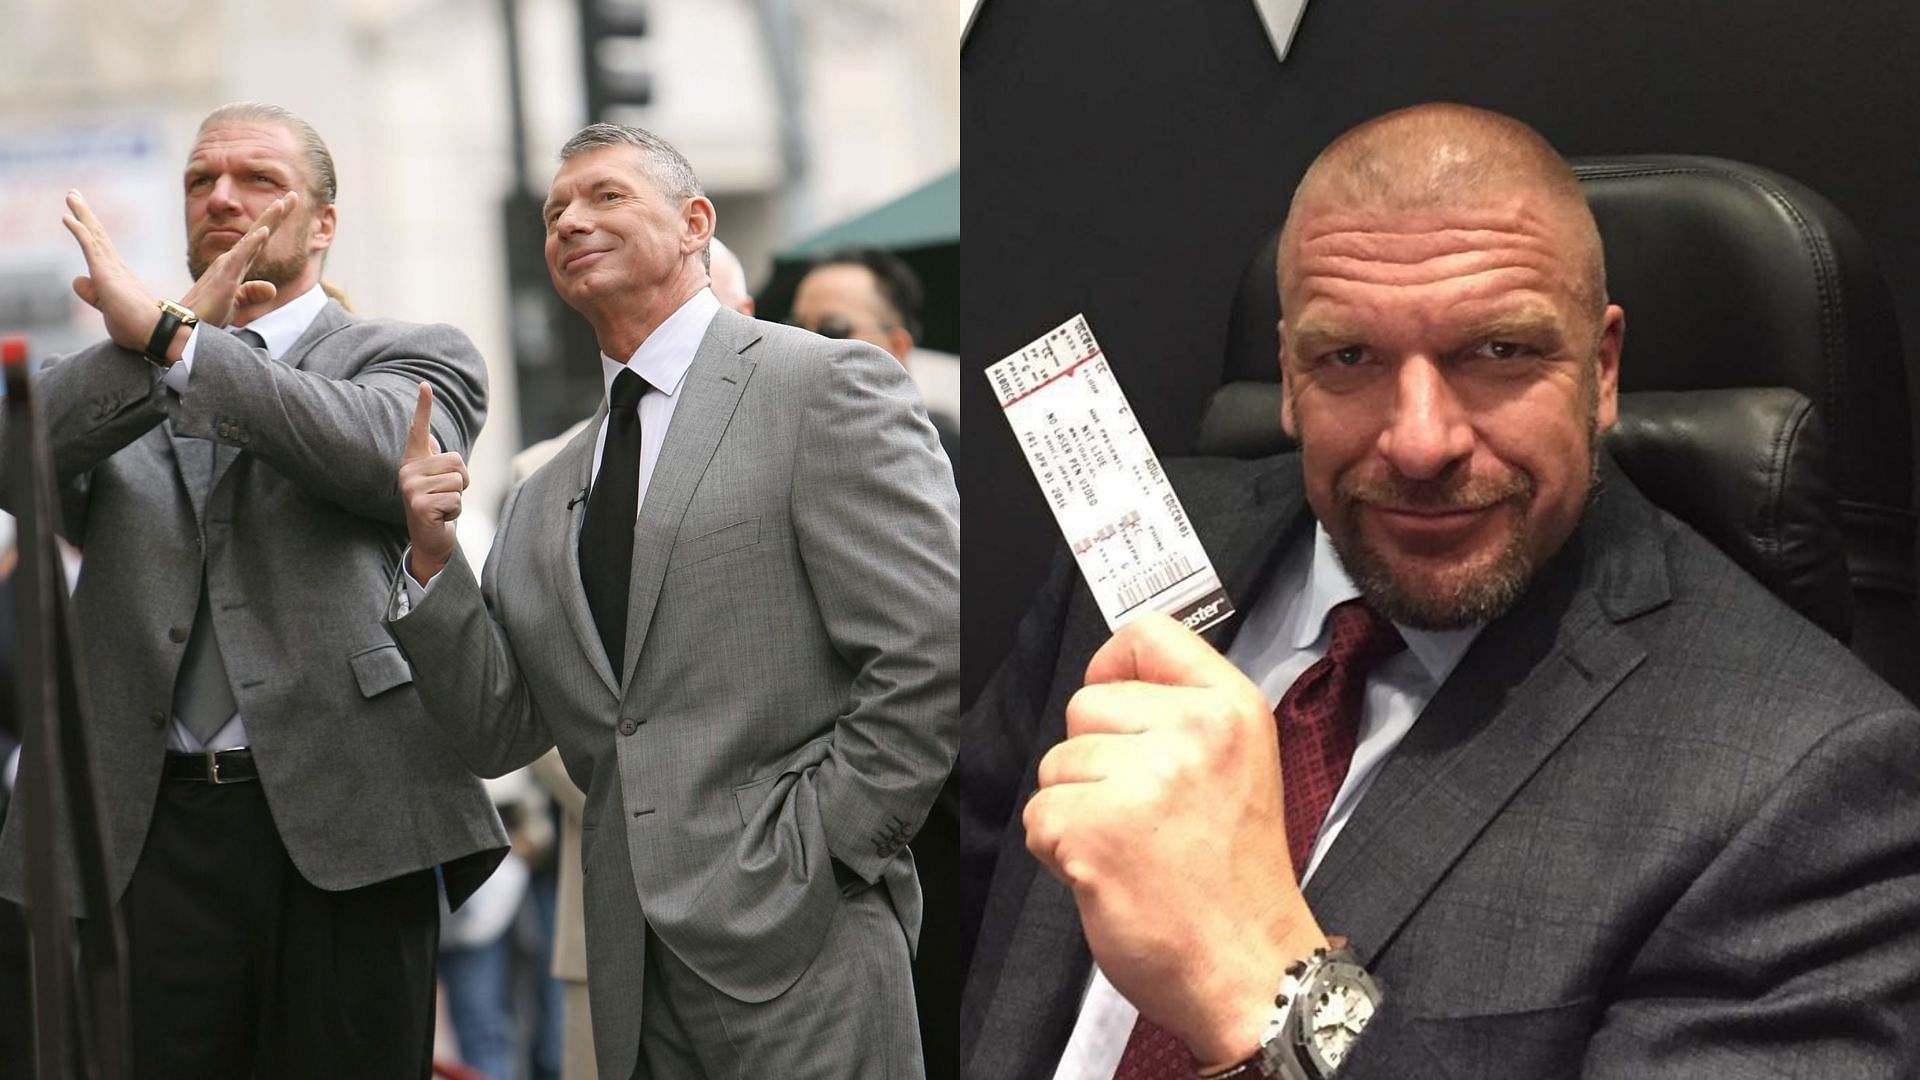 WWE Chairman Vince McMahon and WWE Executive Vice President Triple H